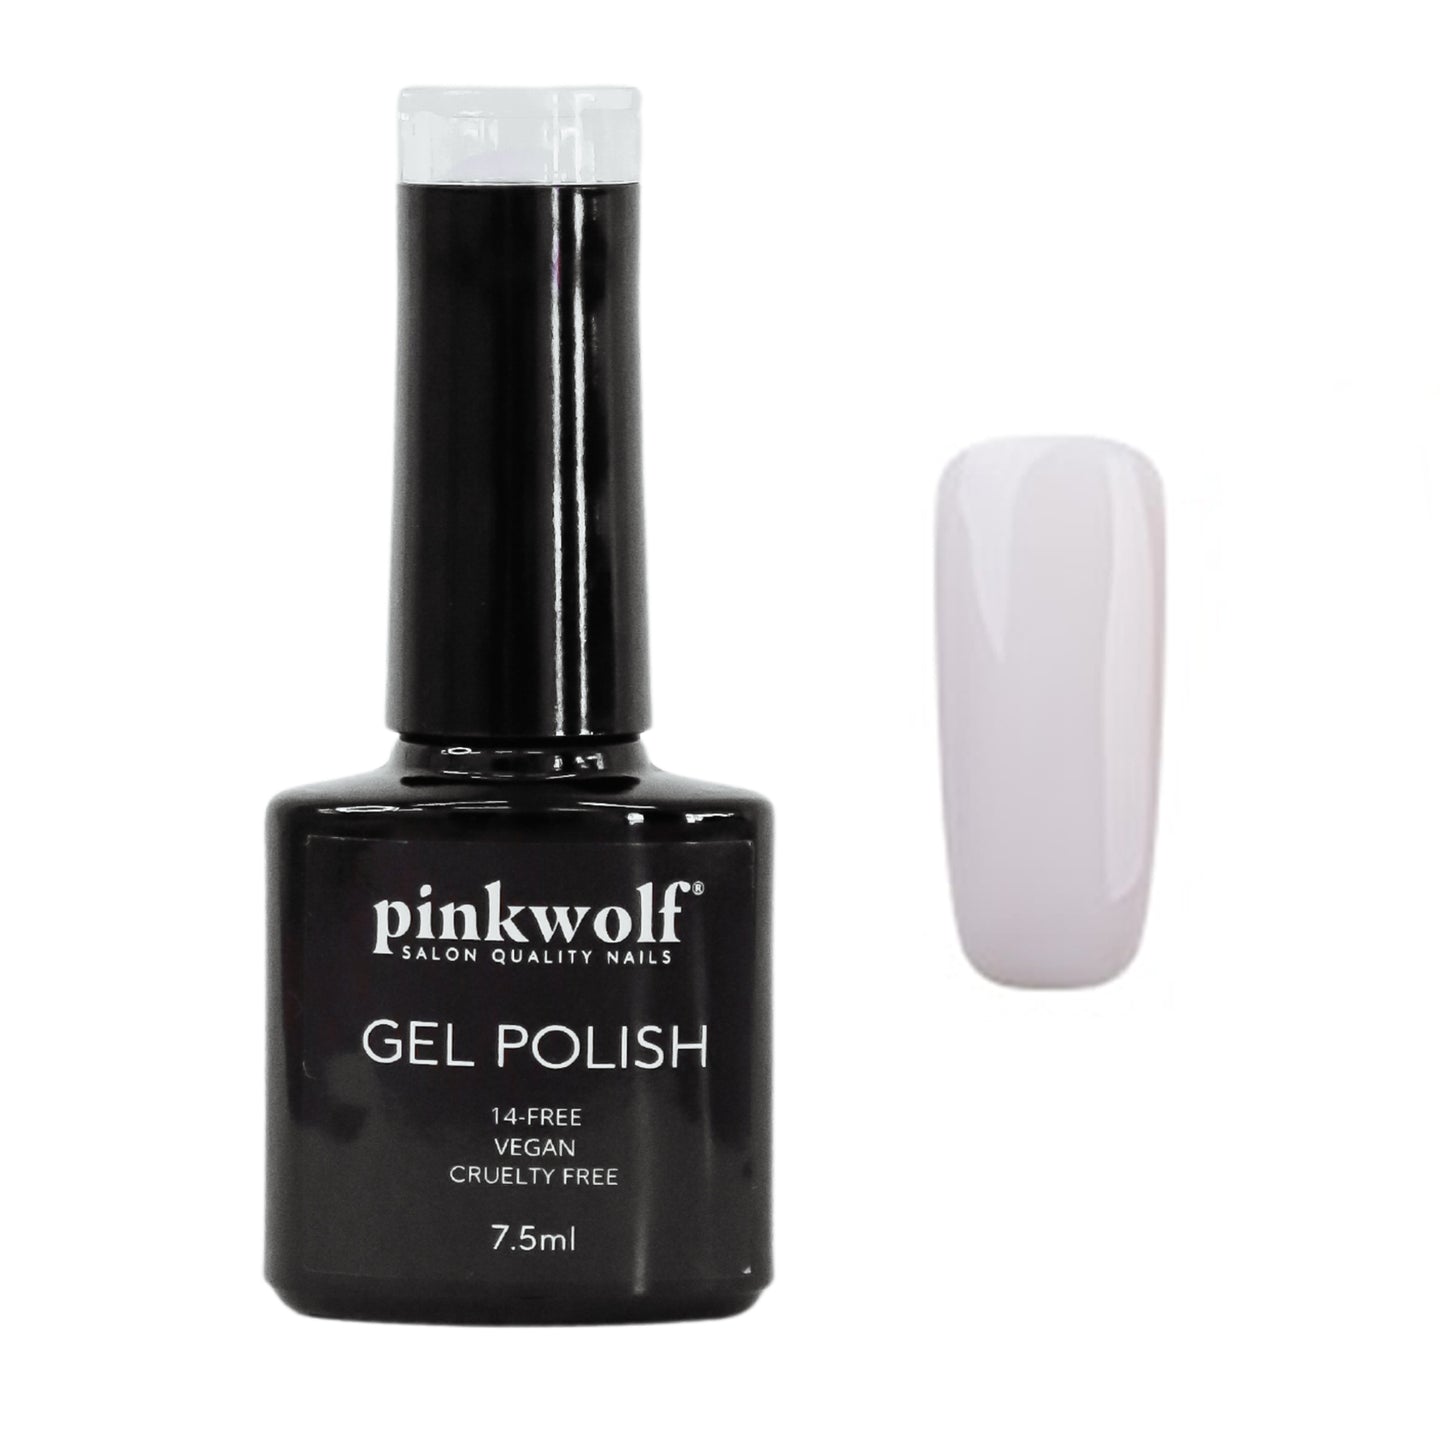 Pinkwolf gel nail polish white 7.5ml bottle